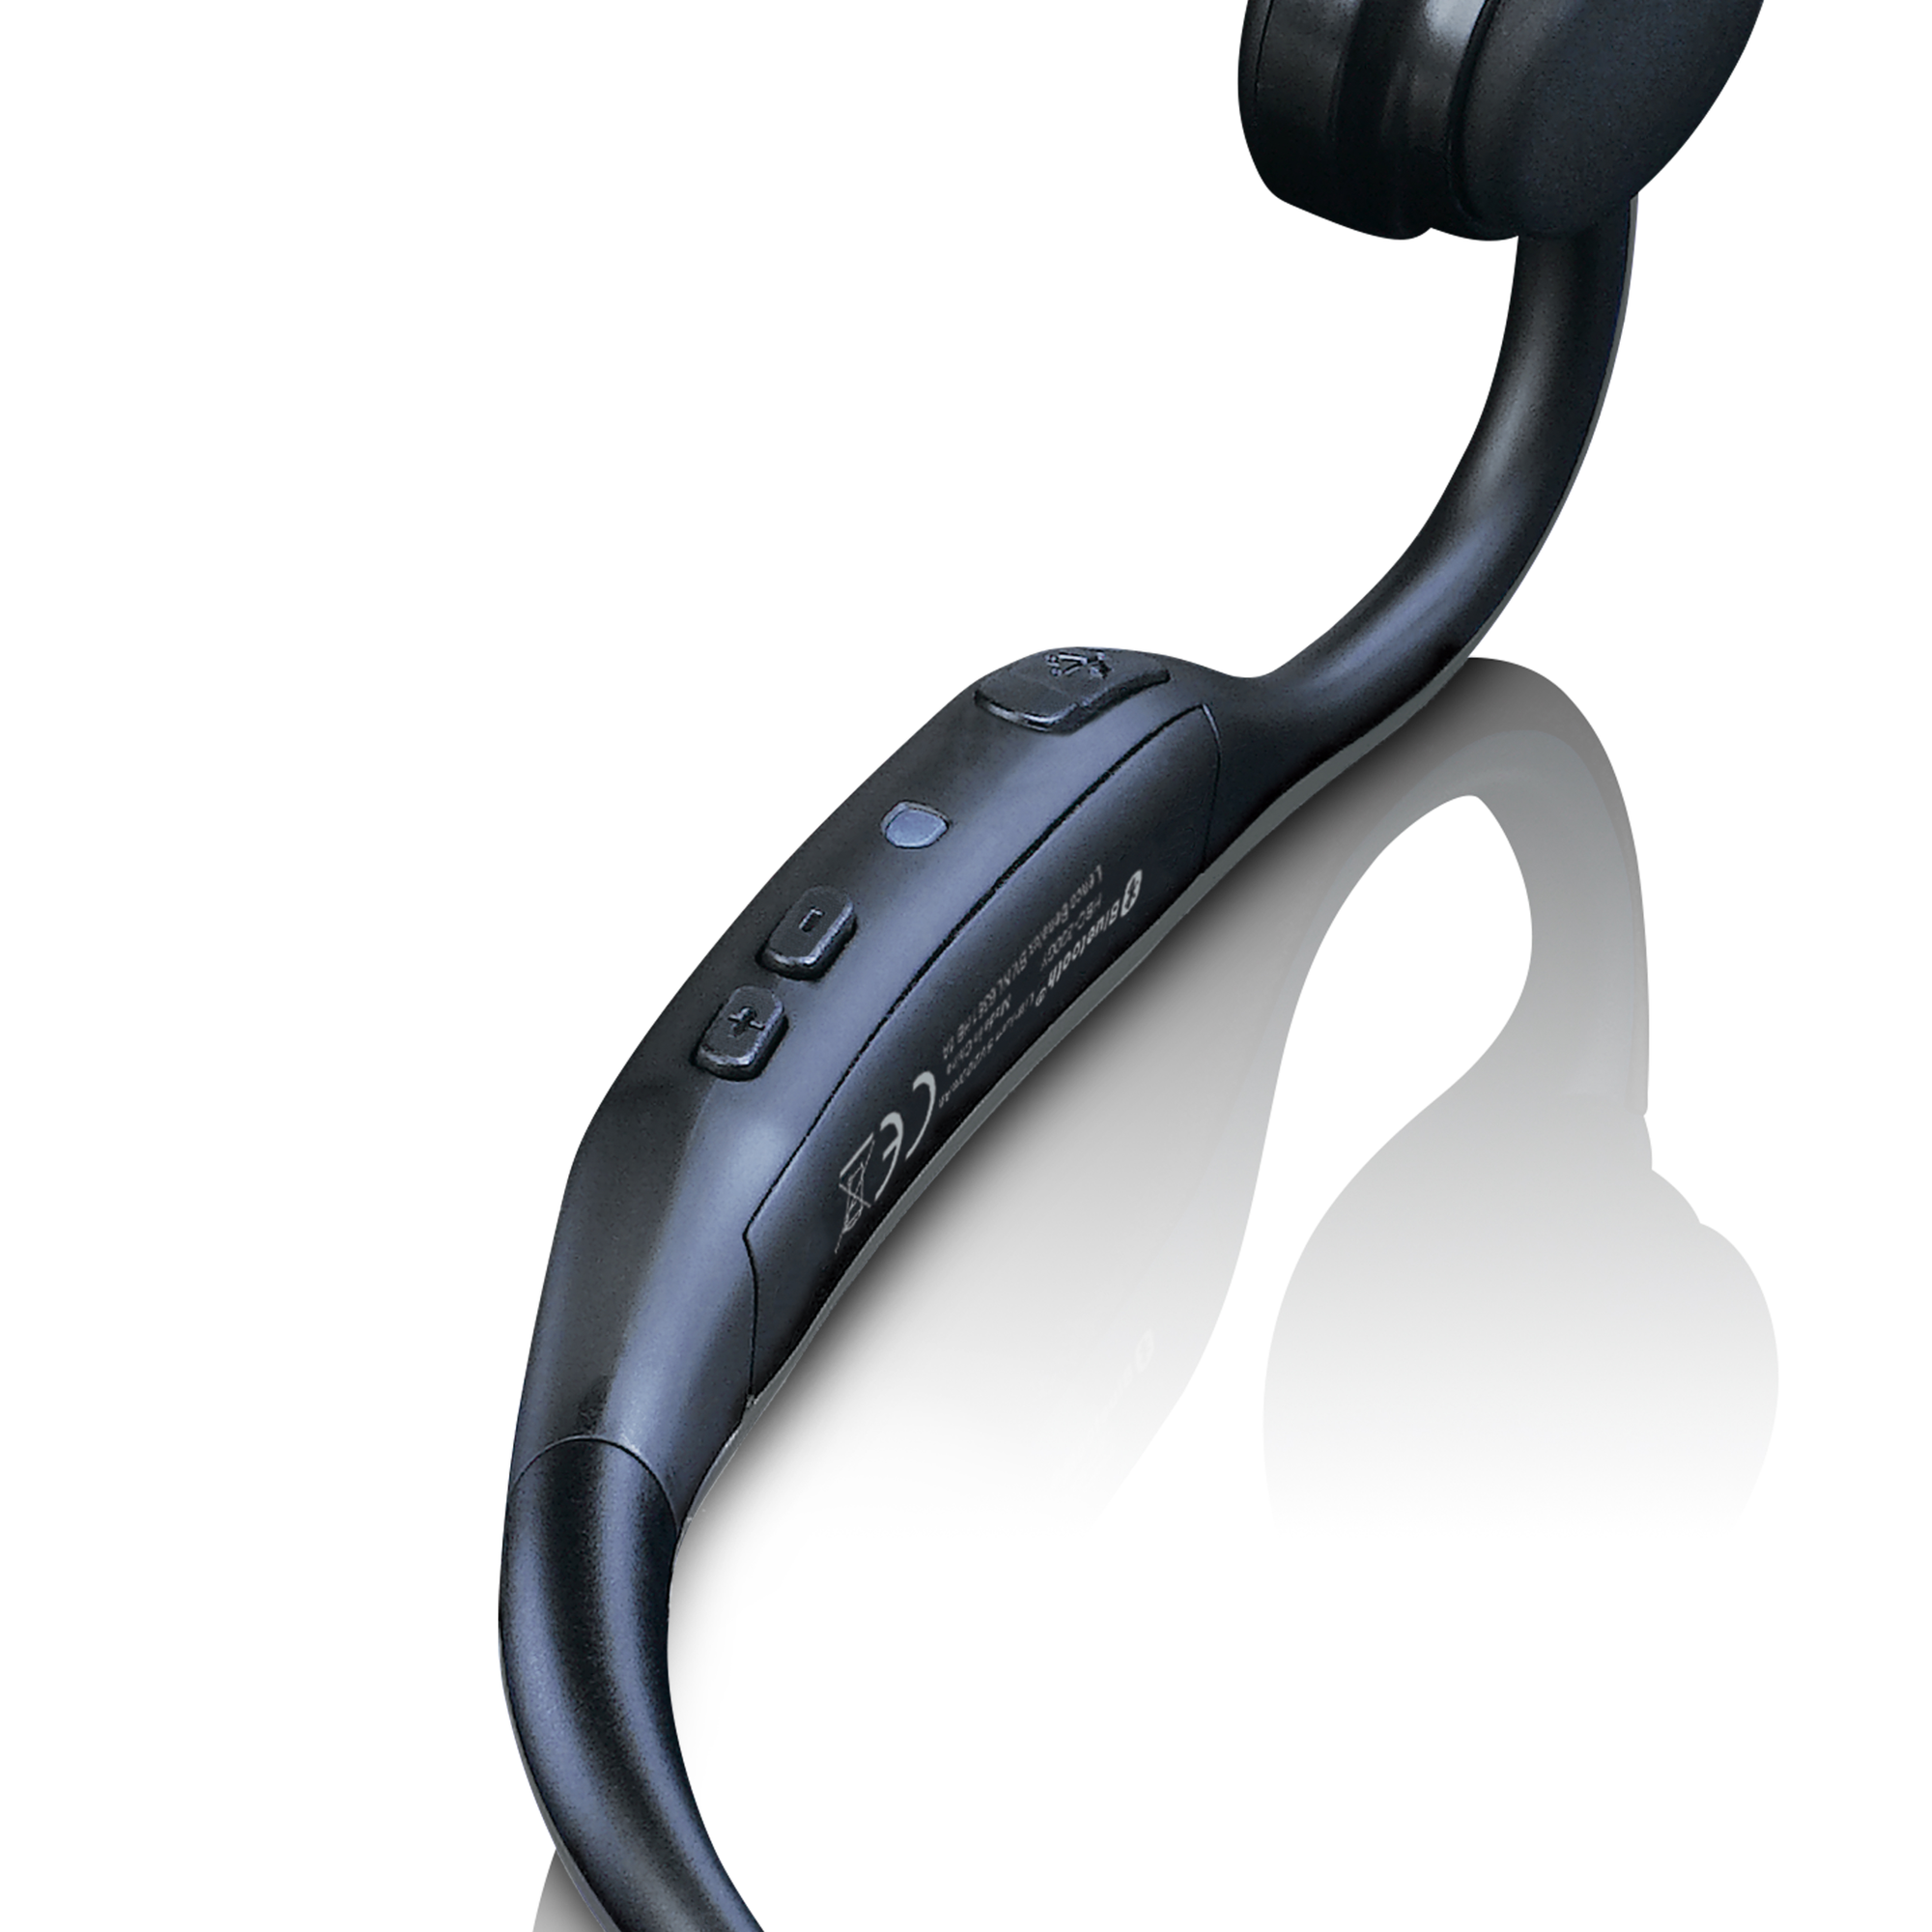 LENCO HBC-200GY, Kinnbügel Bluetooth Schwarz-Grau Bluetooth Headphone